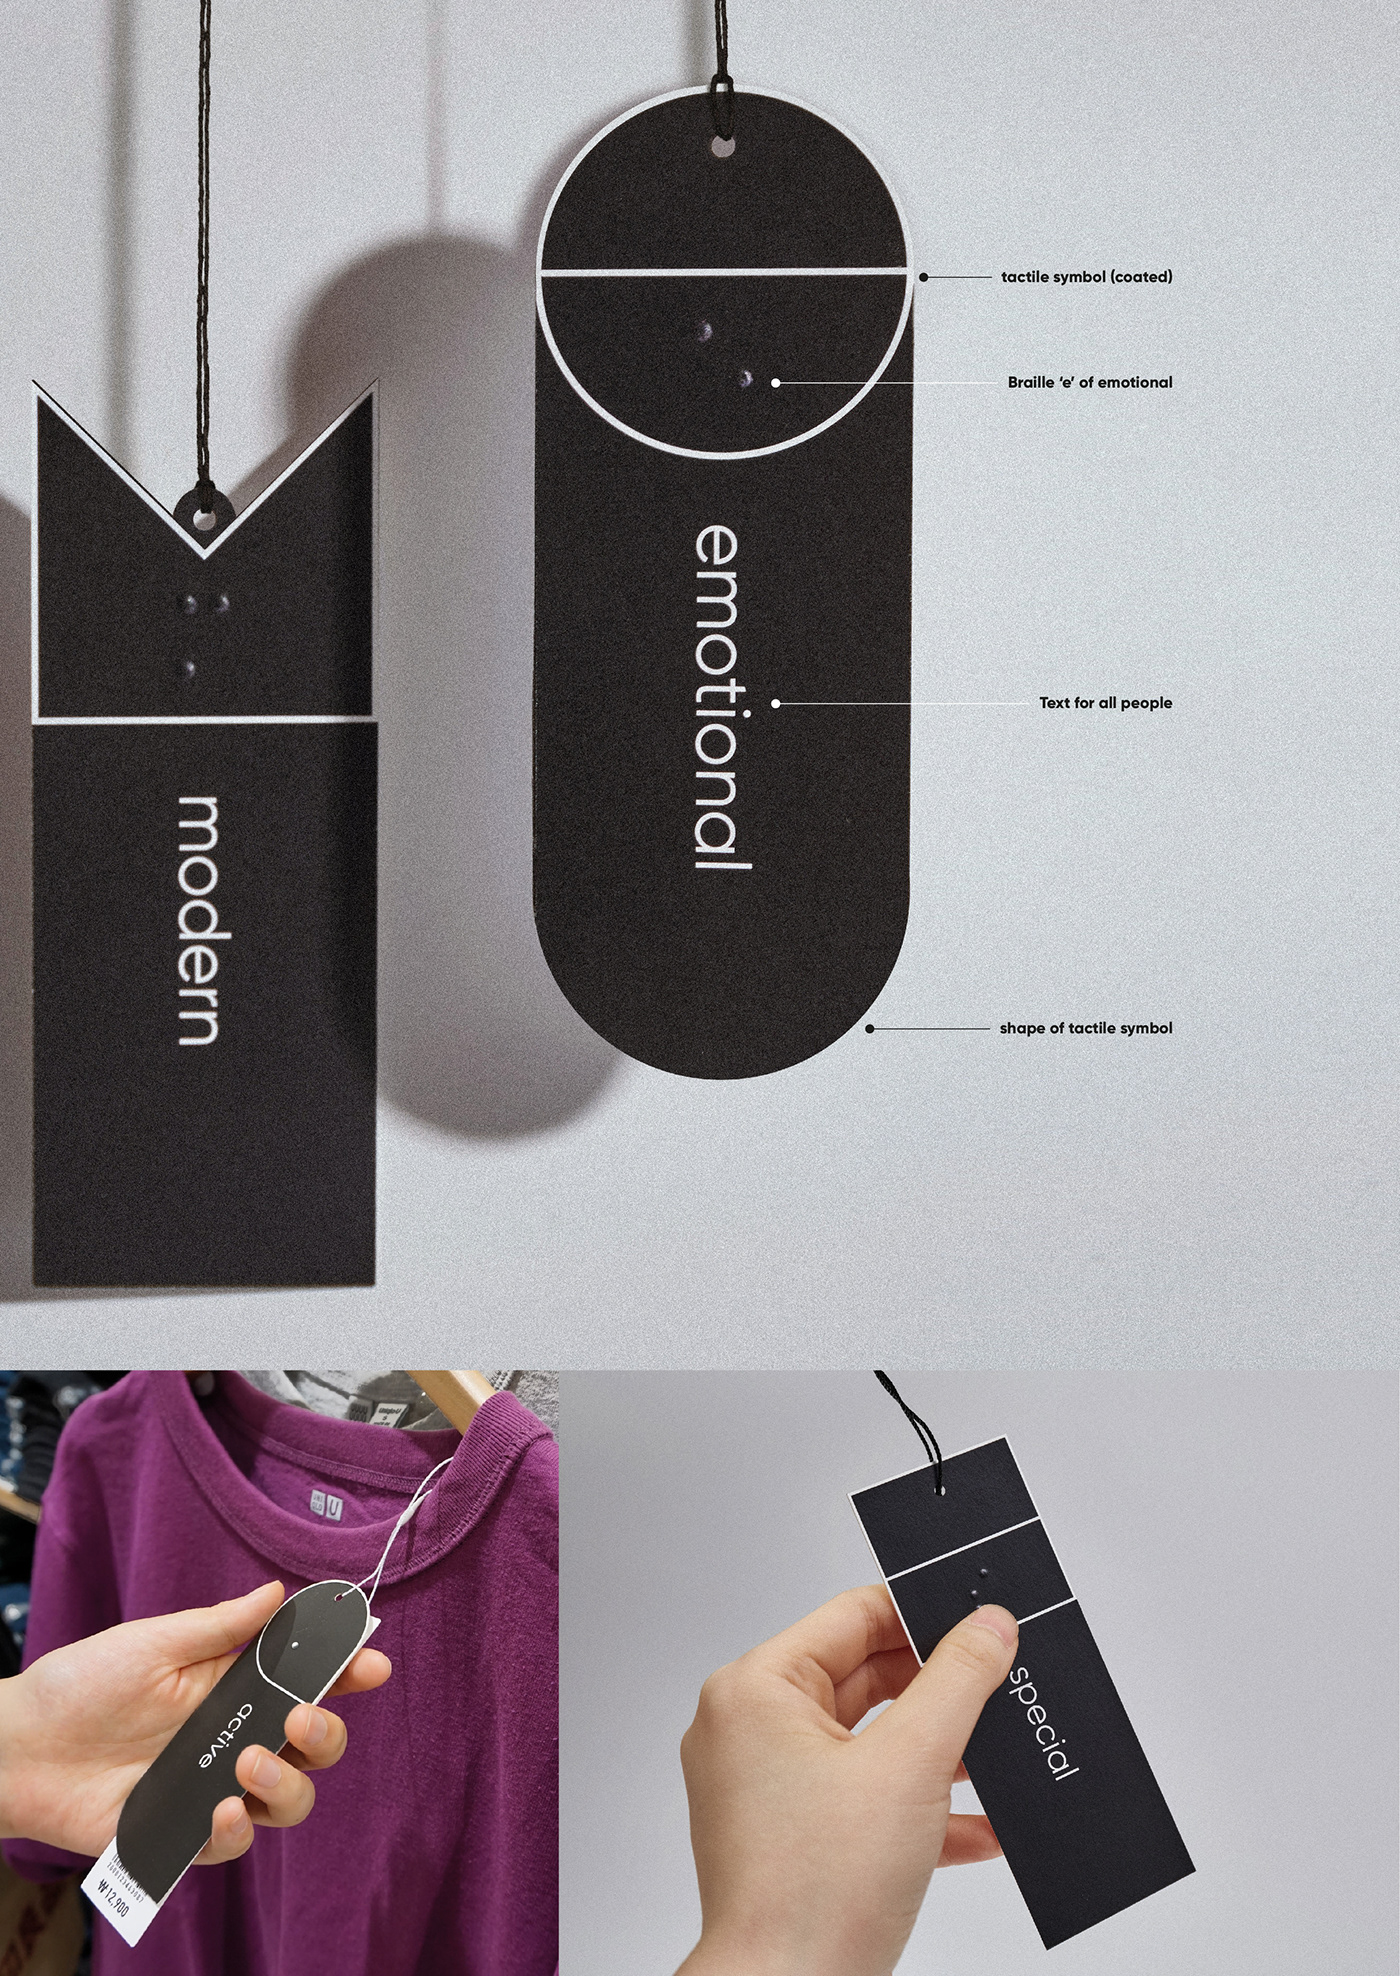 blind Fashion  branding  identity Braille brand experience graphic application magazine adobeawards